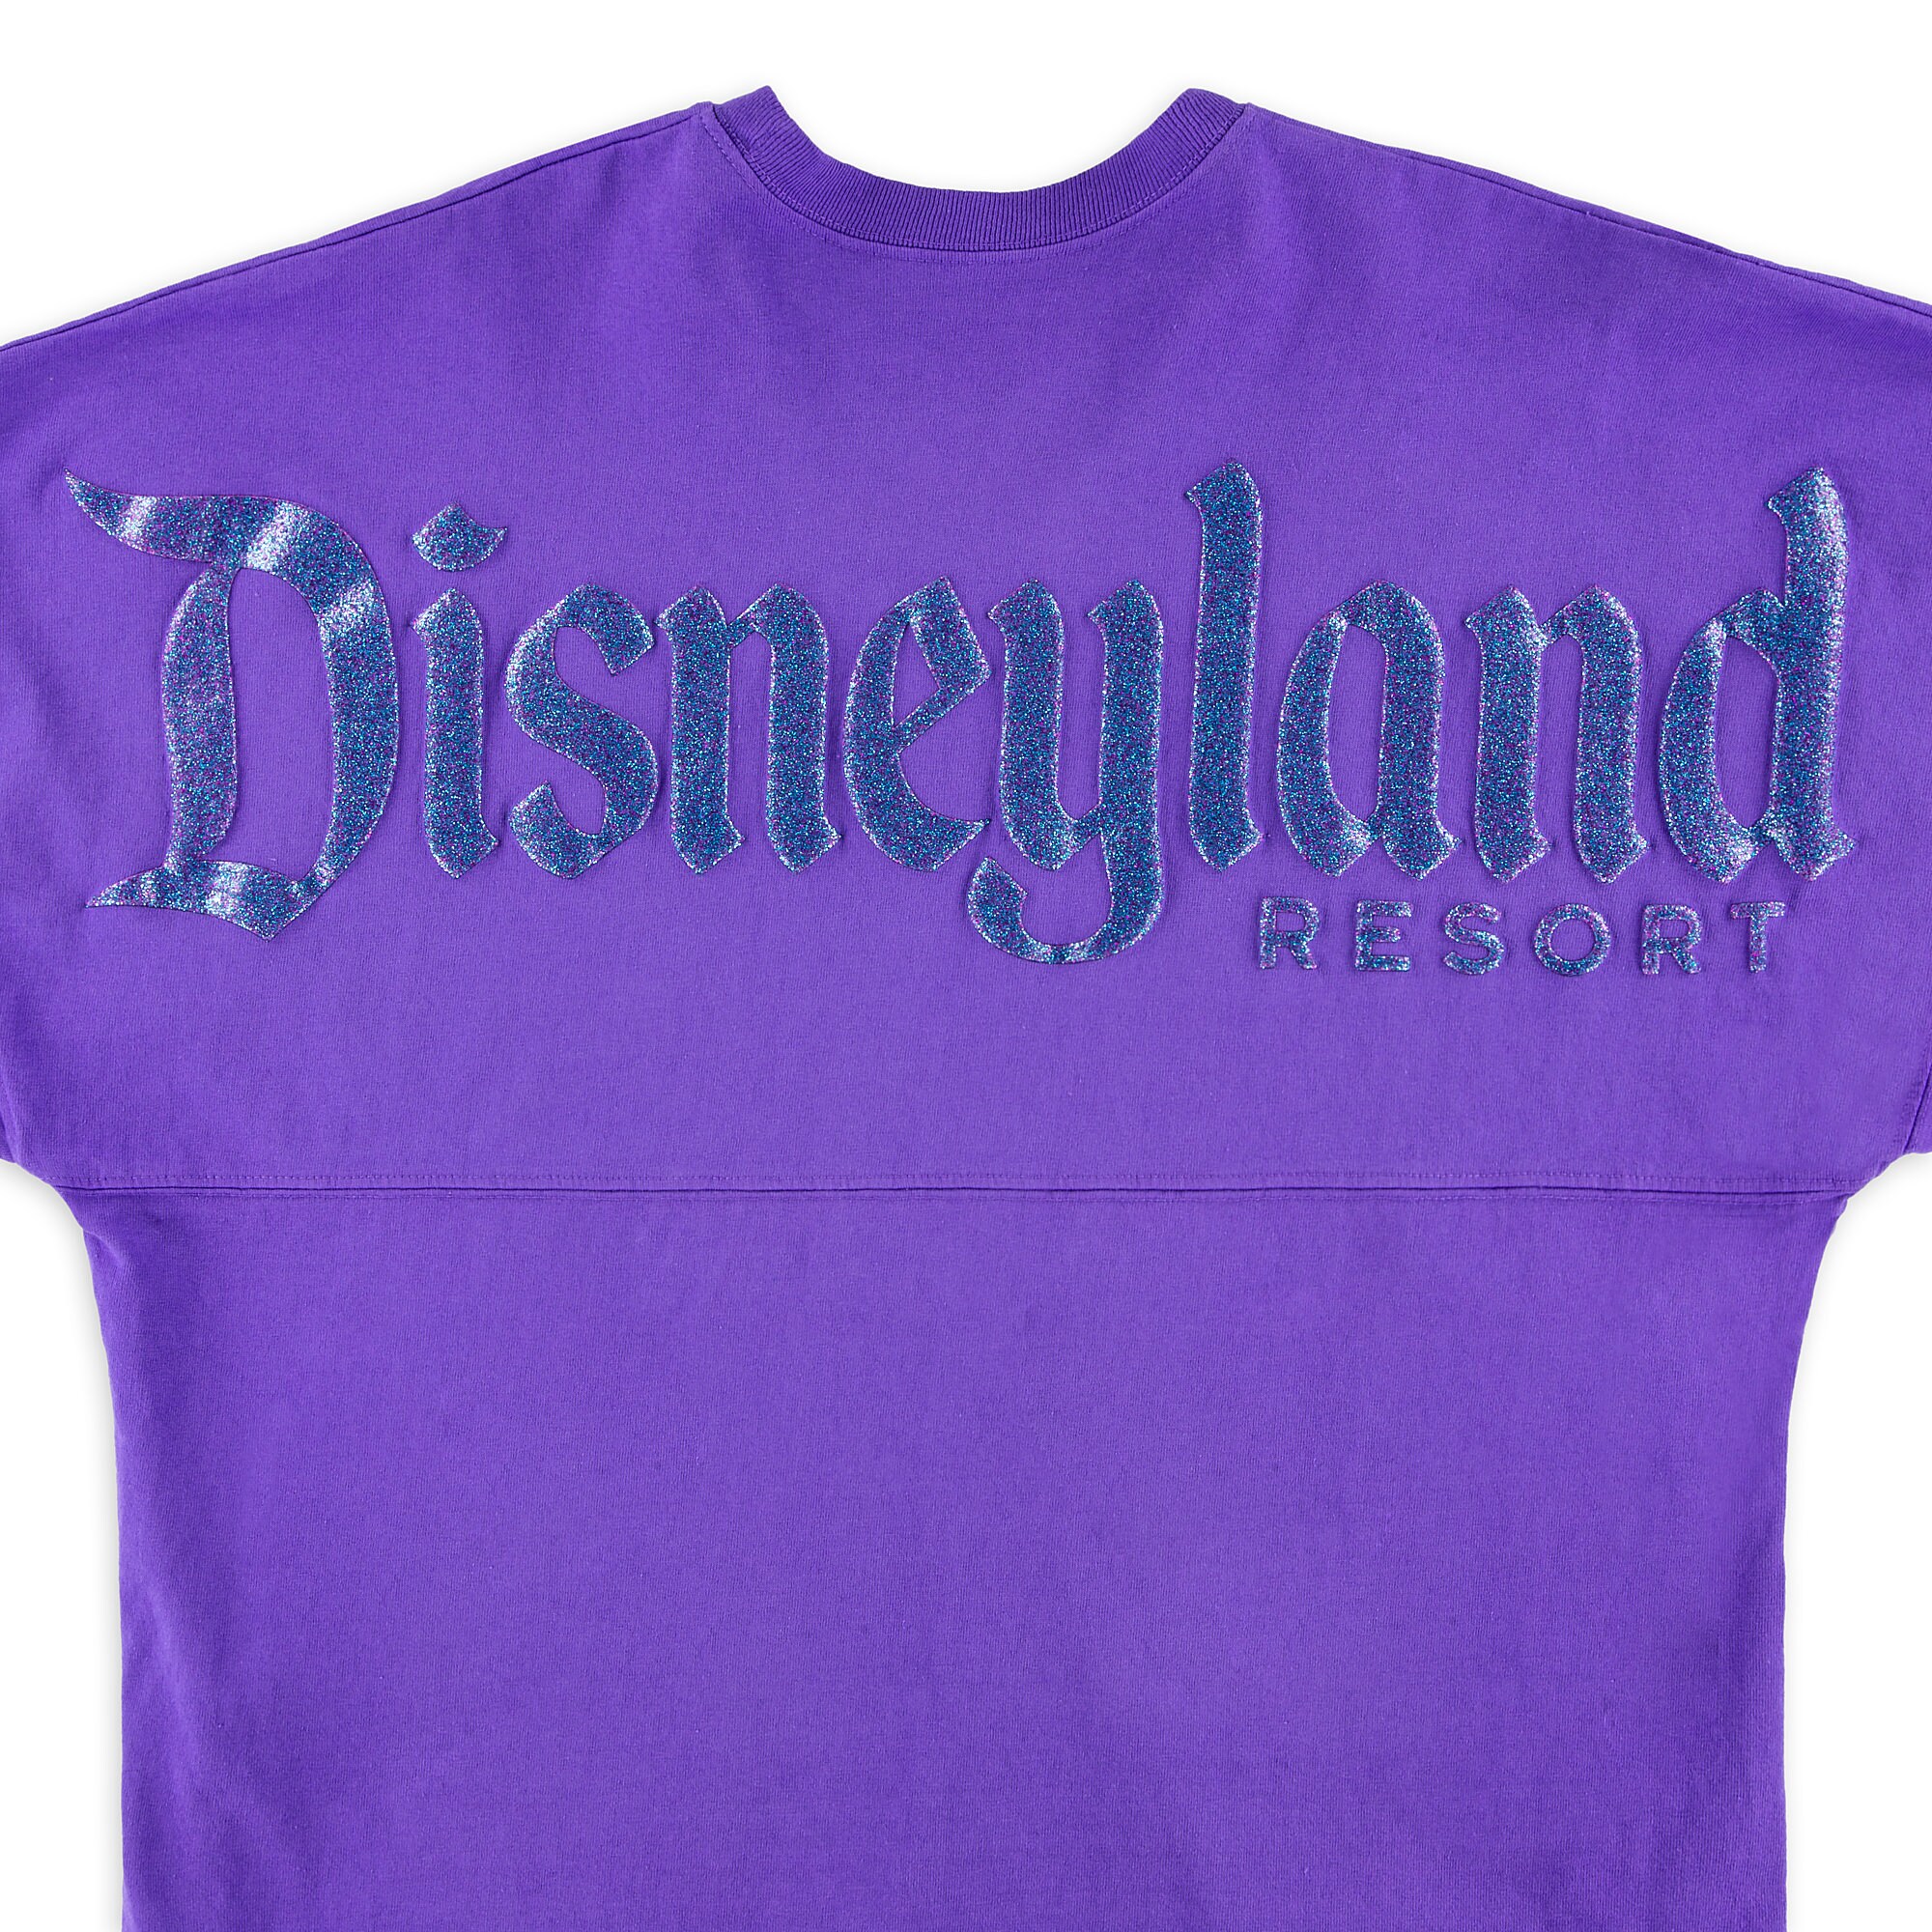 Disneyland Spirit Jersey for Adults - Potion Purple